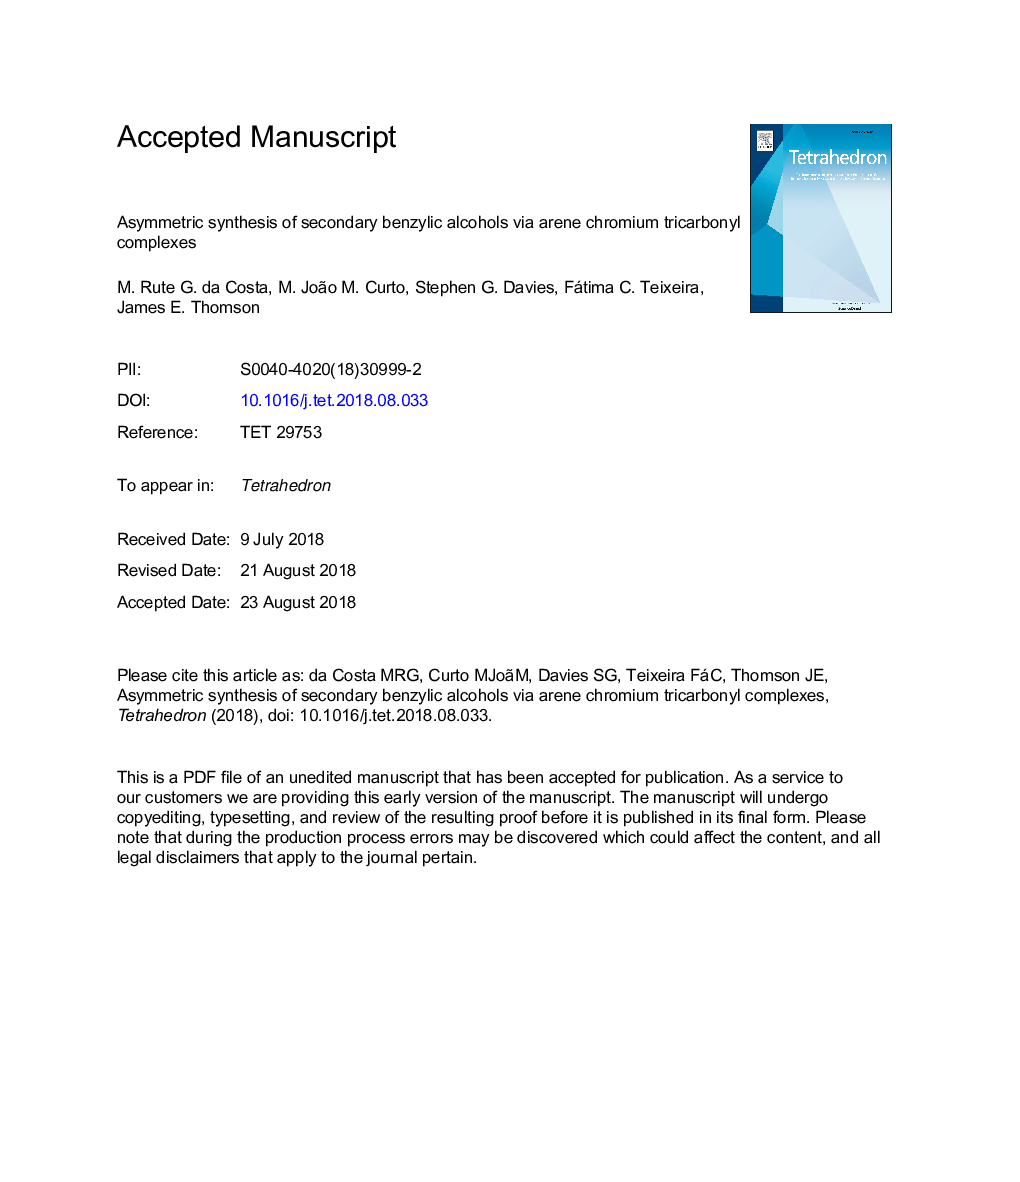 Asymmetric synthesis of secondary benzylic alcohols via arene chromium tricarbonyl complexes